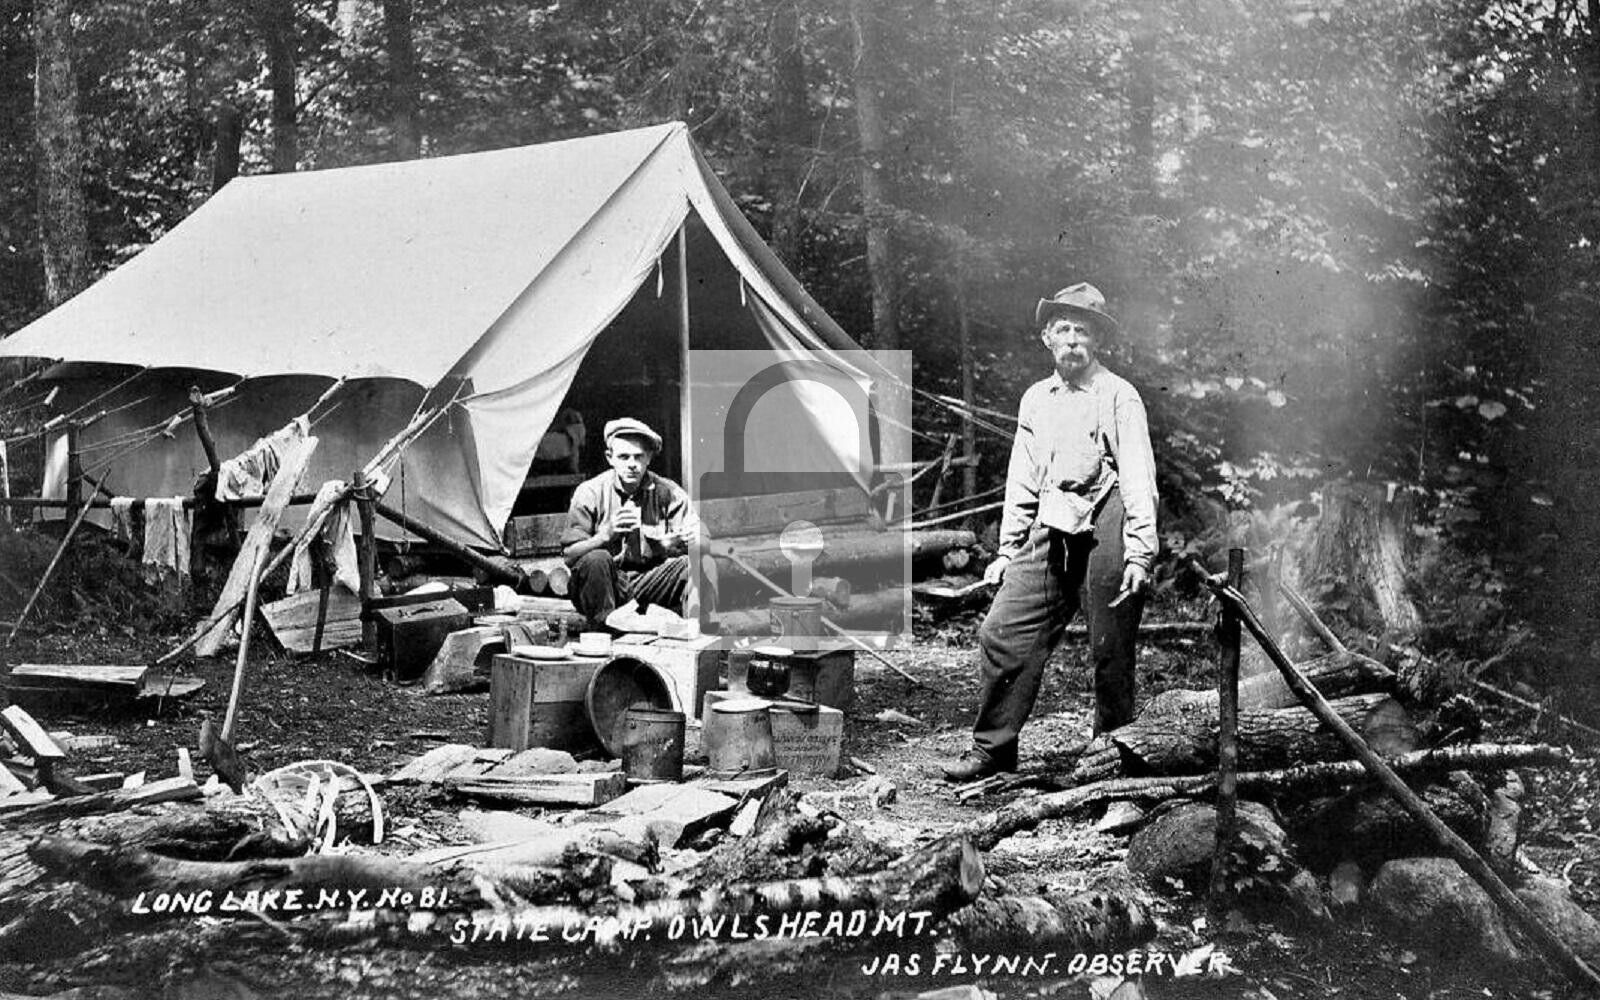 State Camp Owls Head Mountain Long Lake New York NY Reprint Postcard